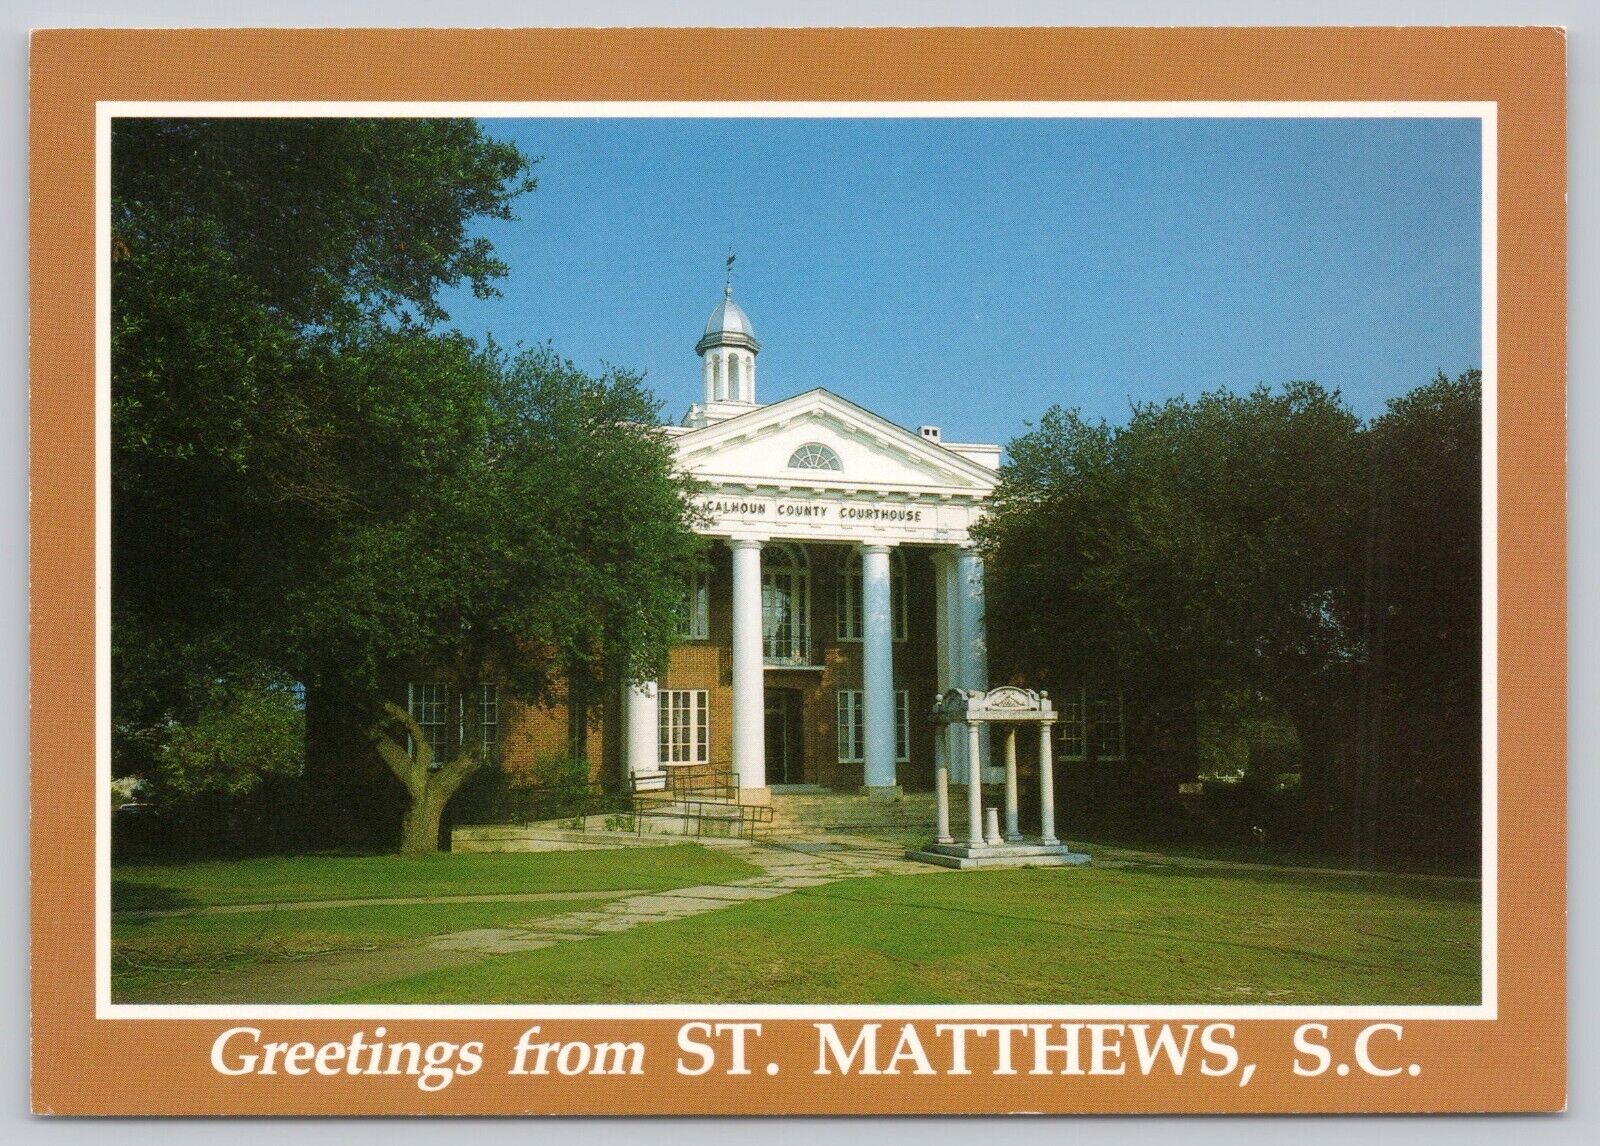 Greetings from St Matthews SC South Carolina, Calhoun County Courthouse Postcard